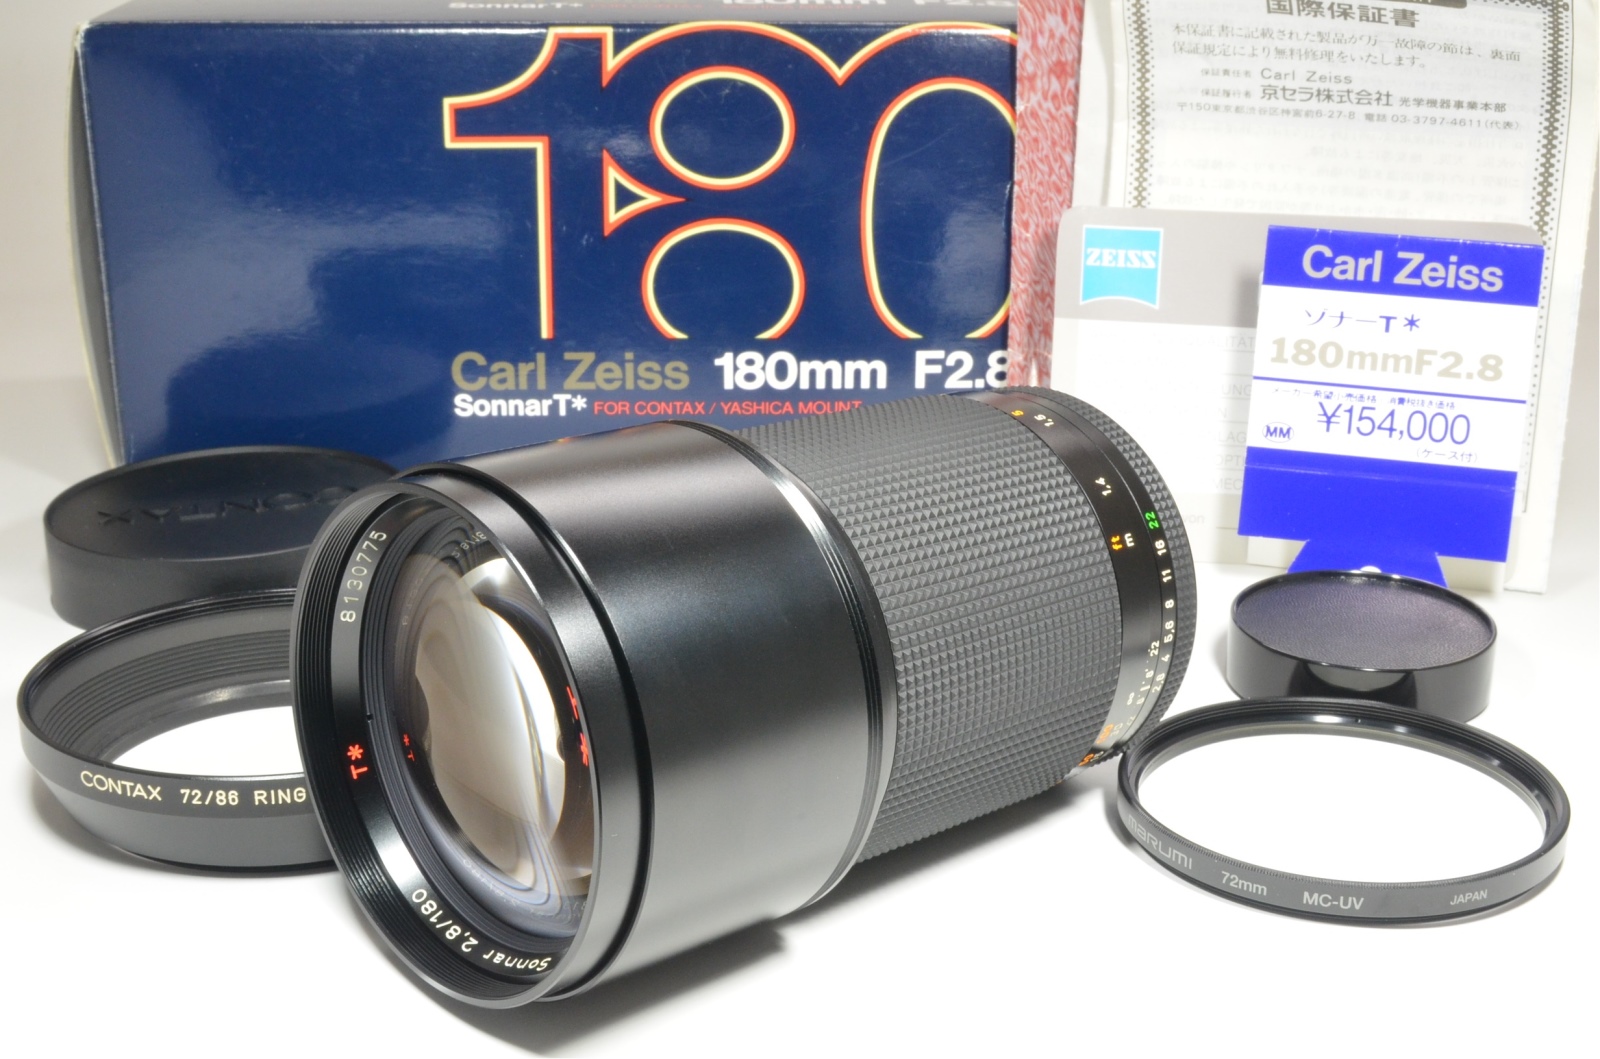 CONTAX Carl Zeiss Sonnar 180mm F2.8 MMJ-